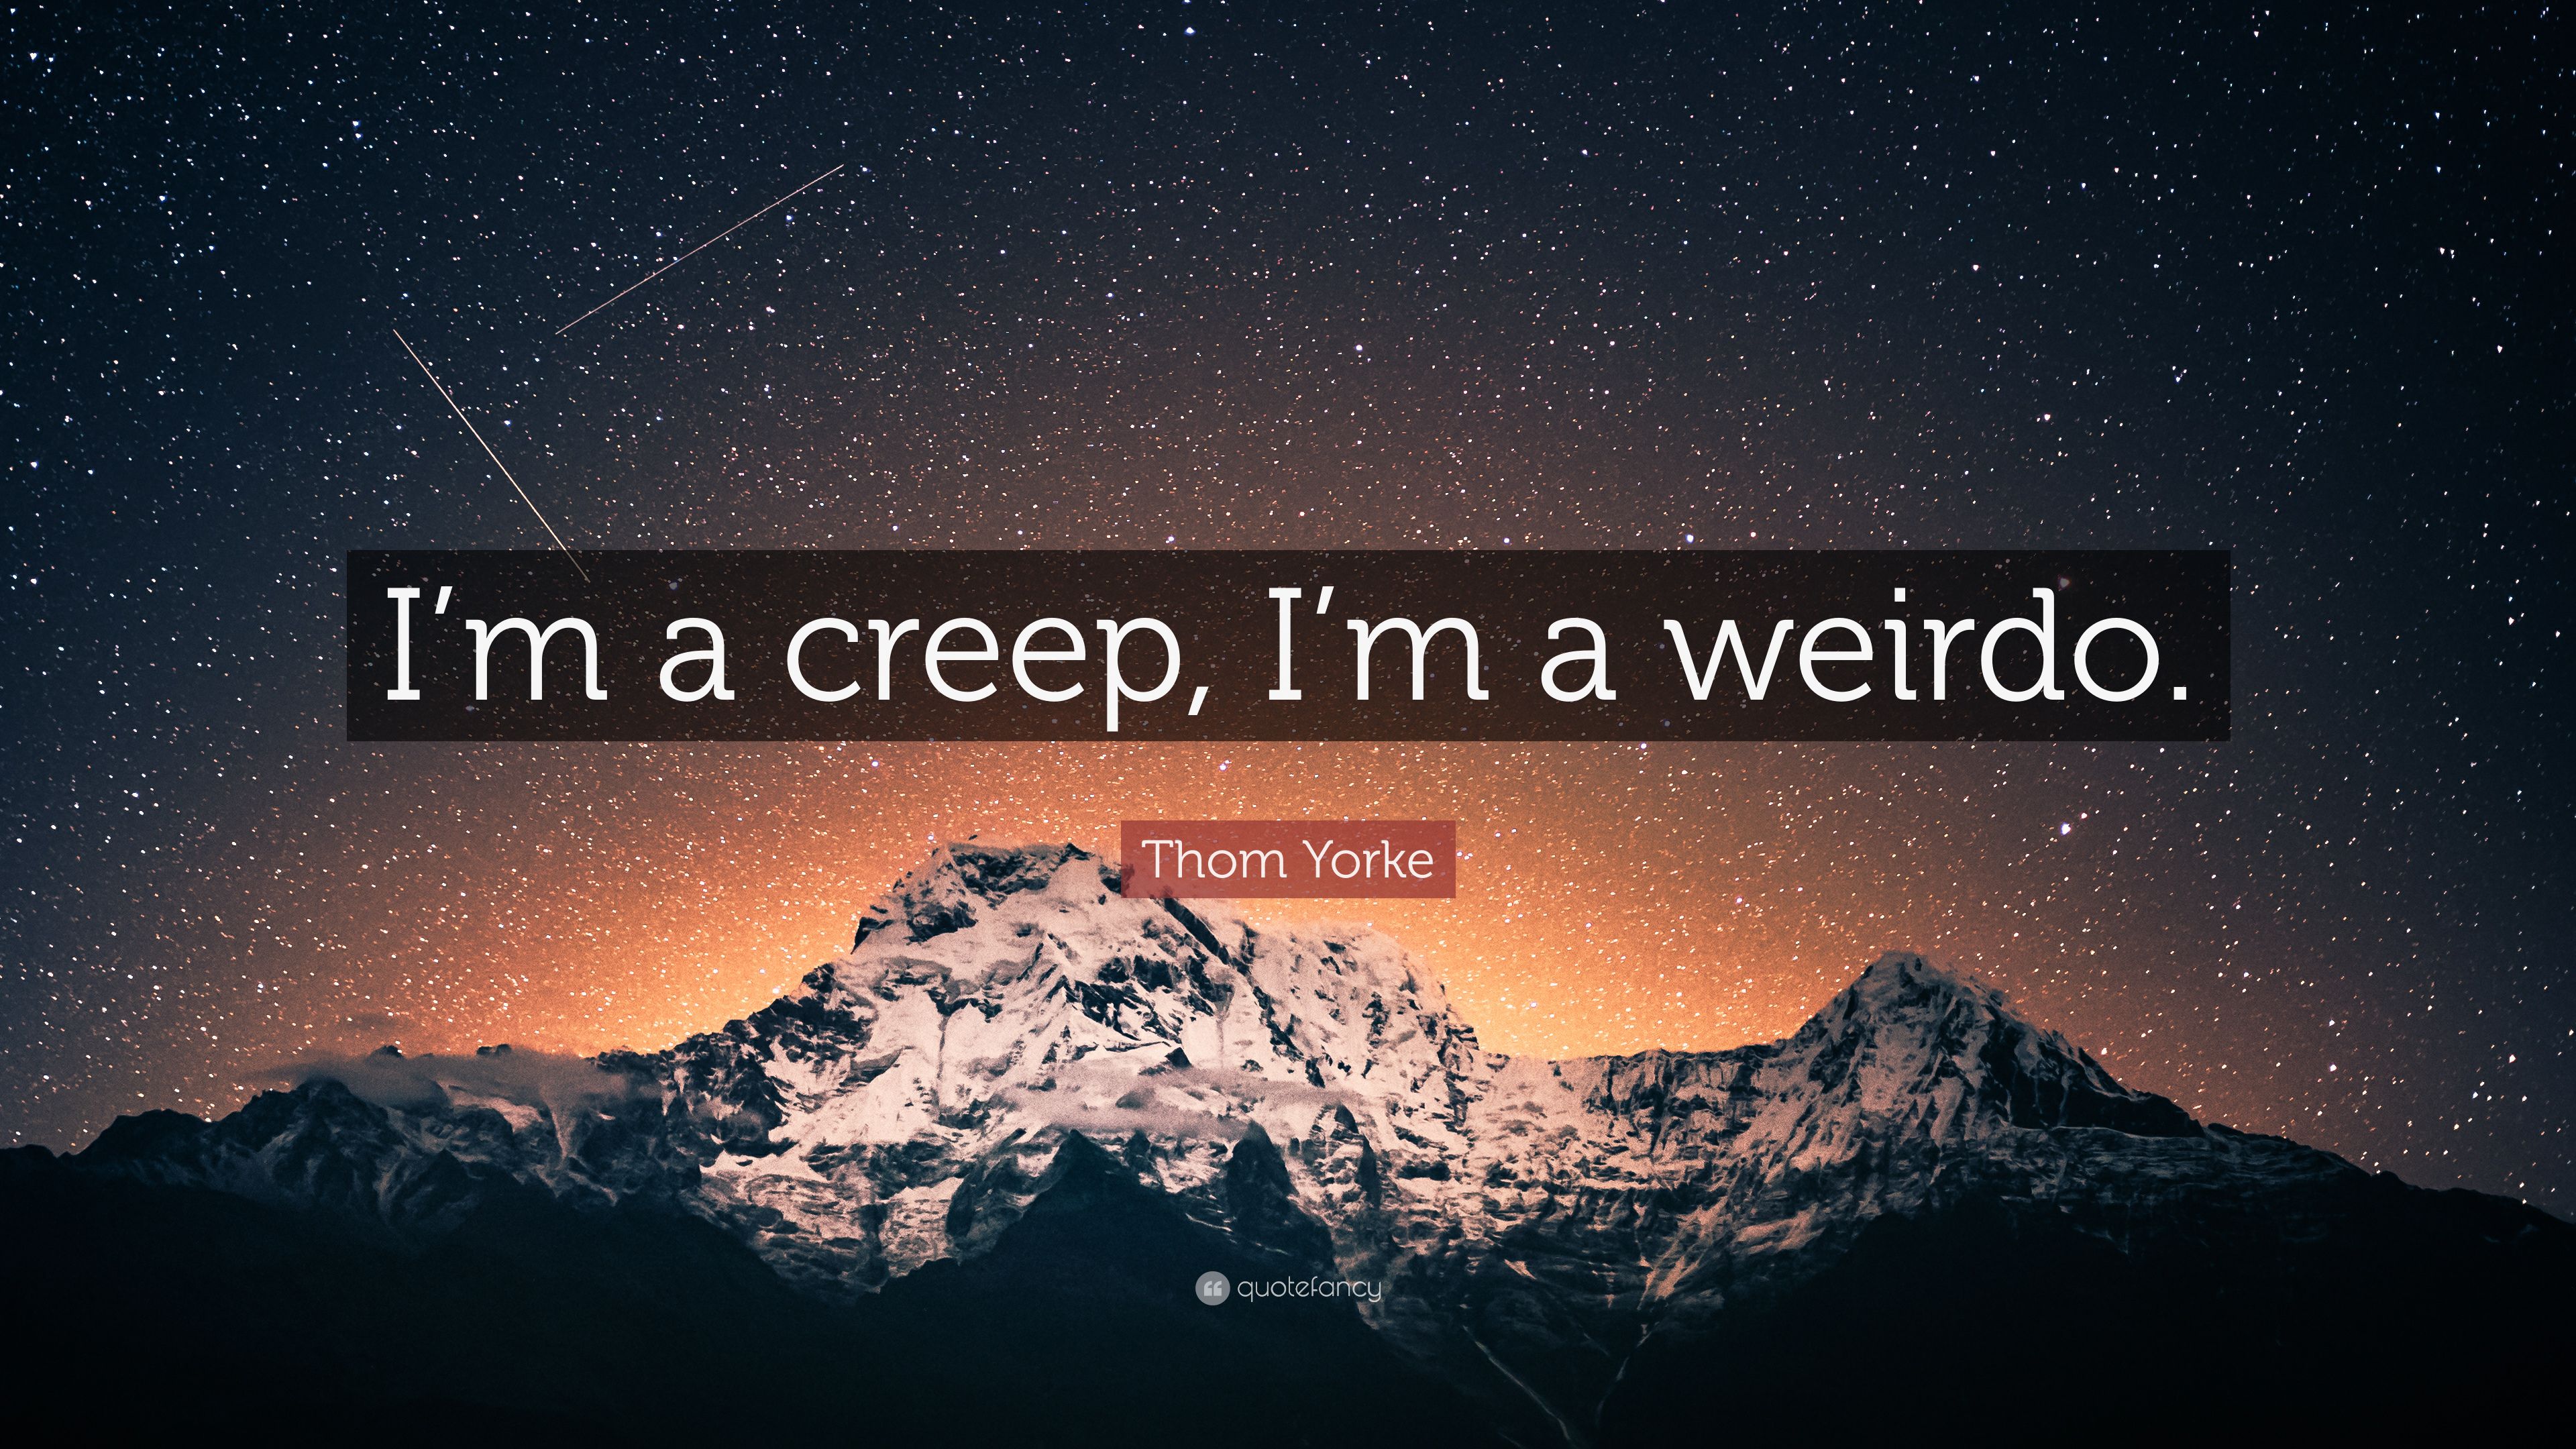 Thom Yorke Quote: “I'm a creep, I'm a .quotefancy.com